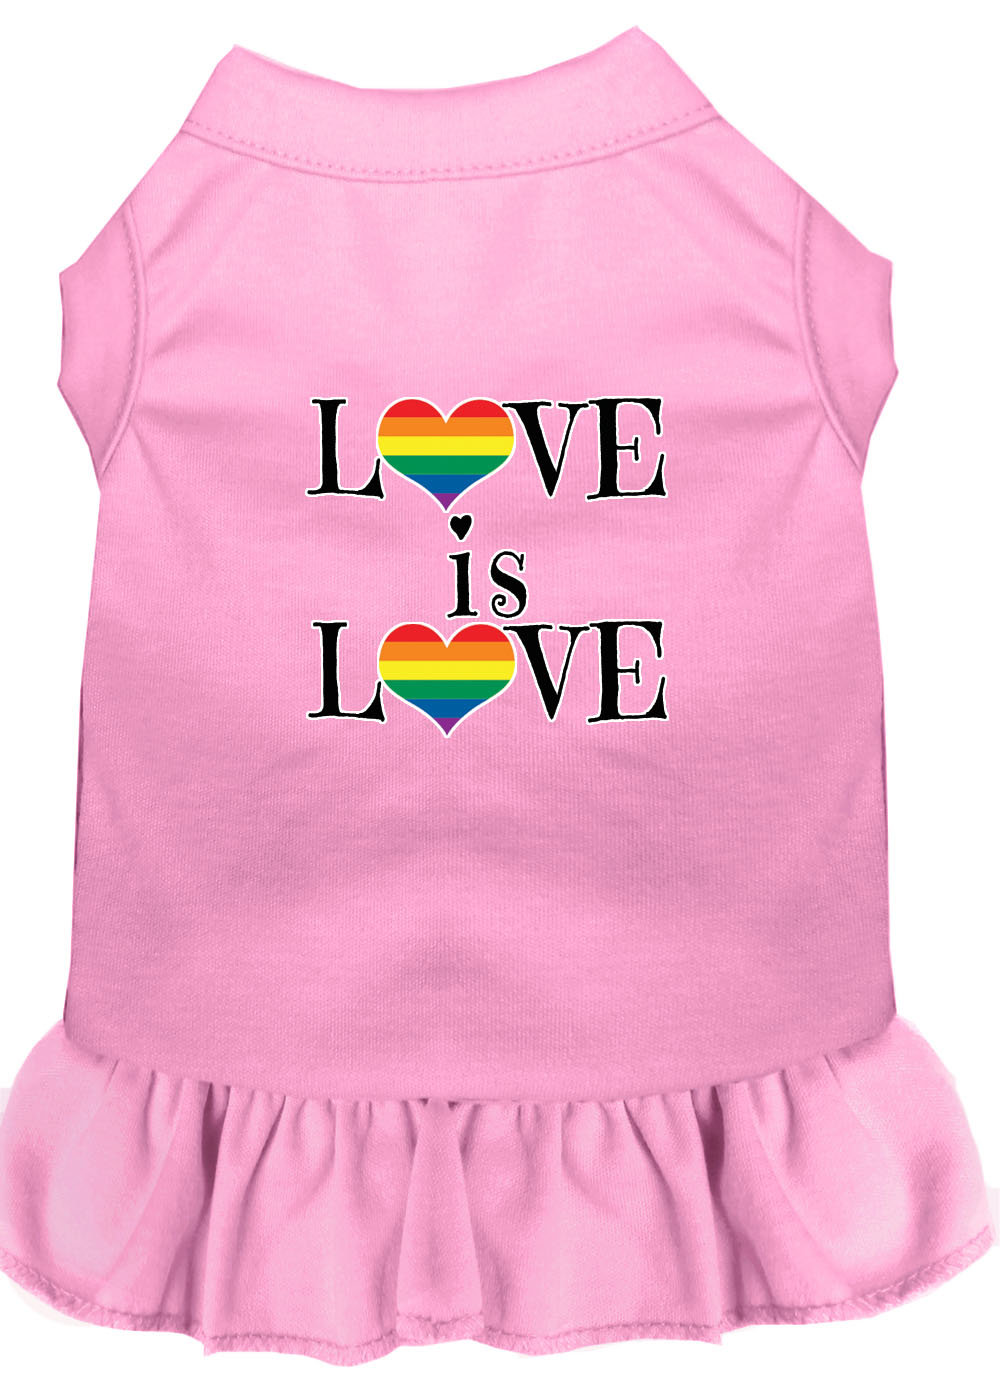 Love is Love Screen Print Dog Dress Light Pink XL